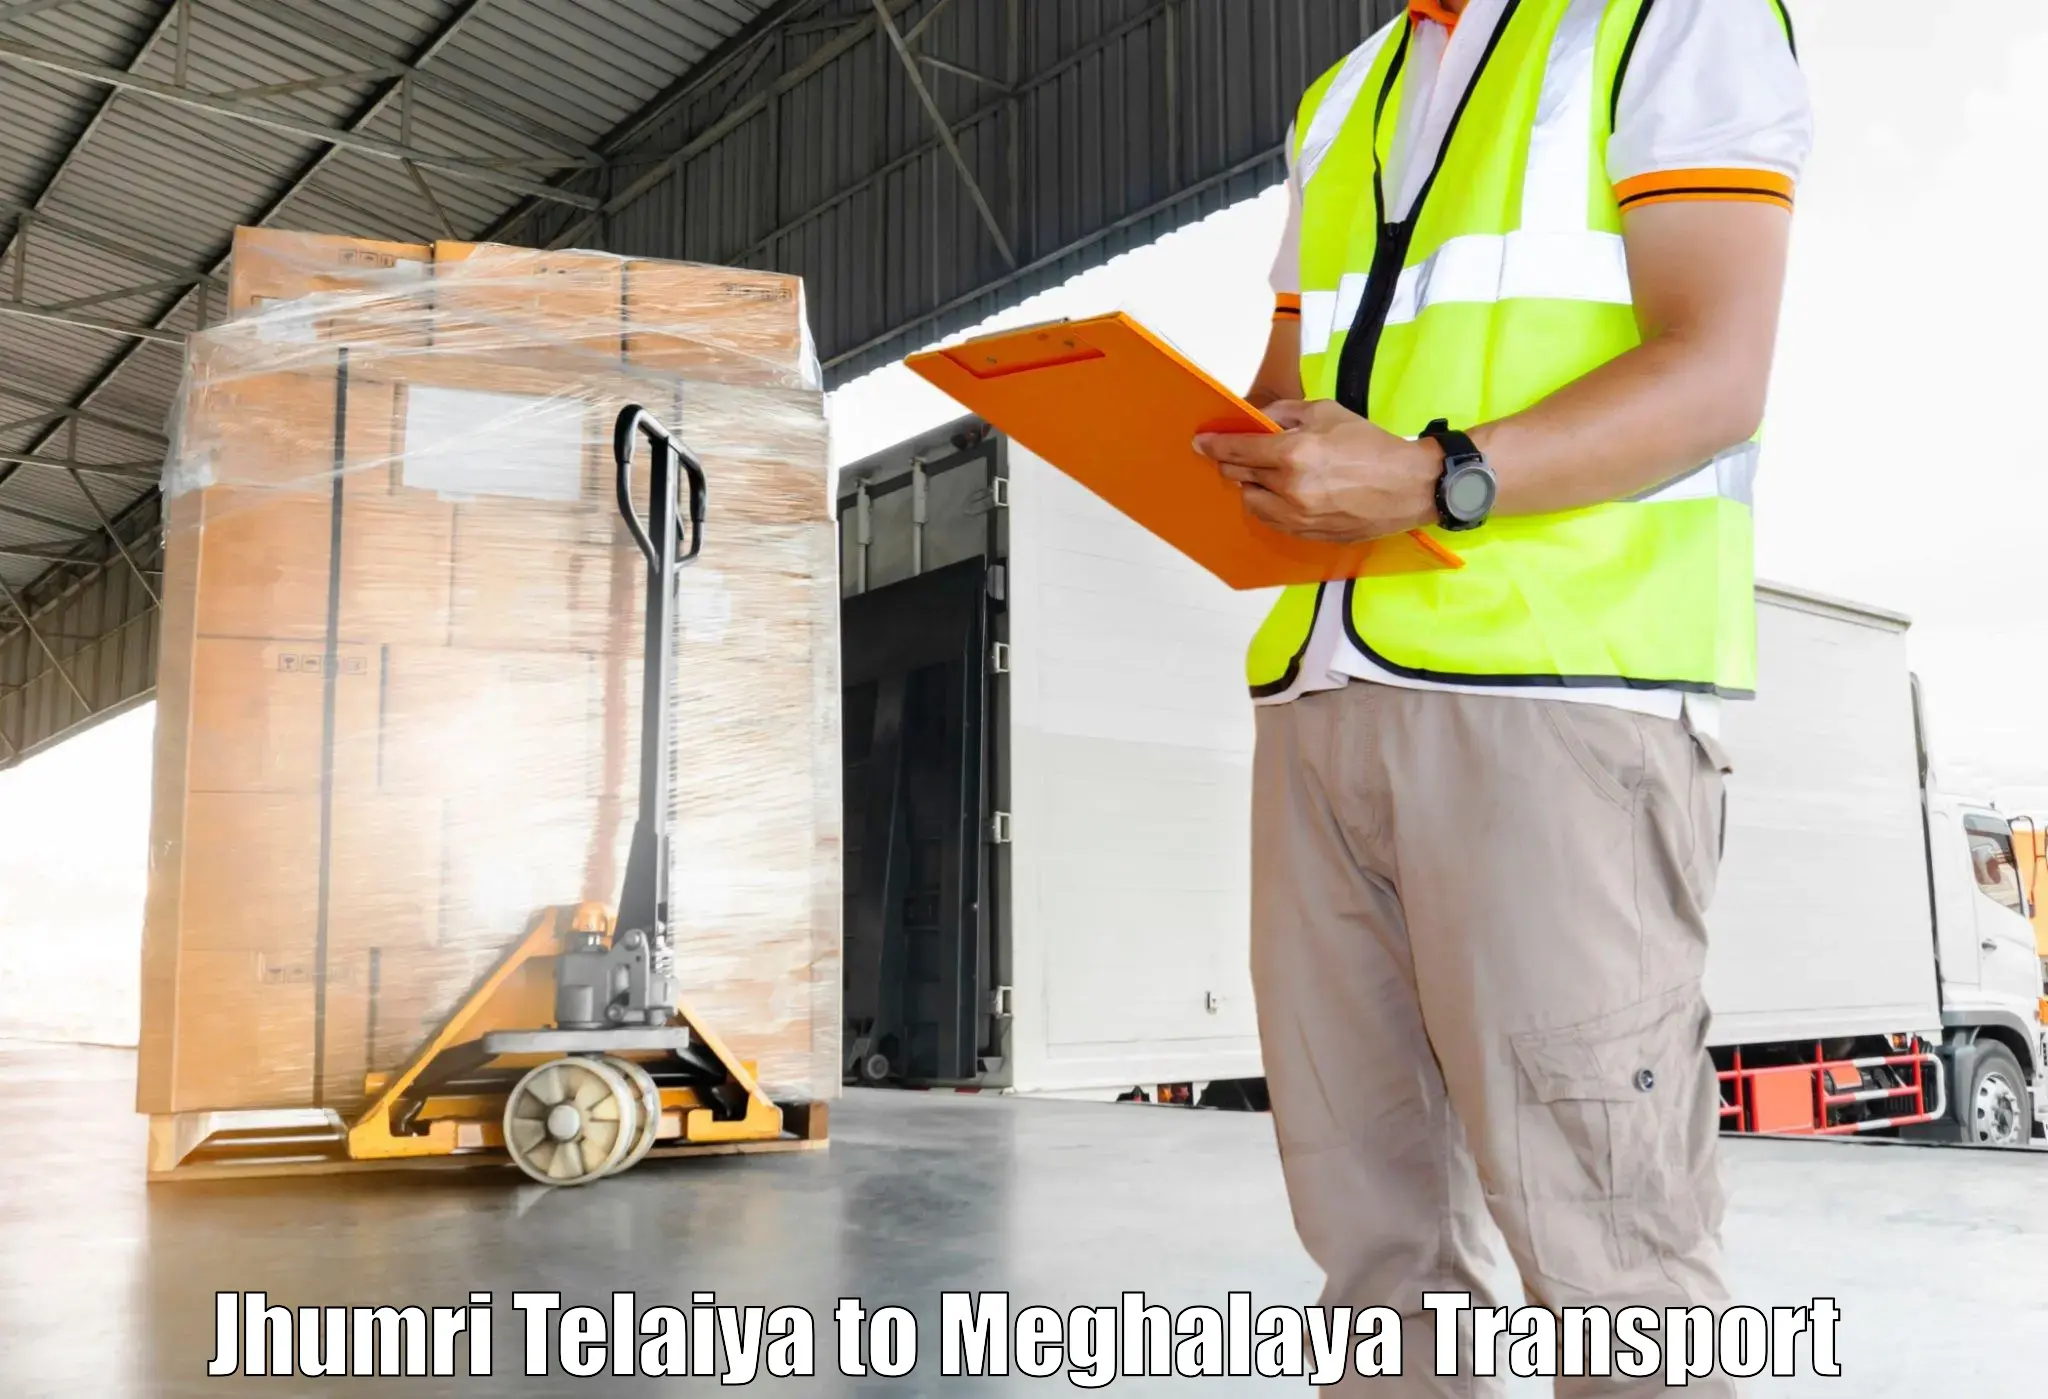 Container transportation services Jhumri Telaiya to Meghalaya